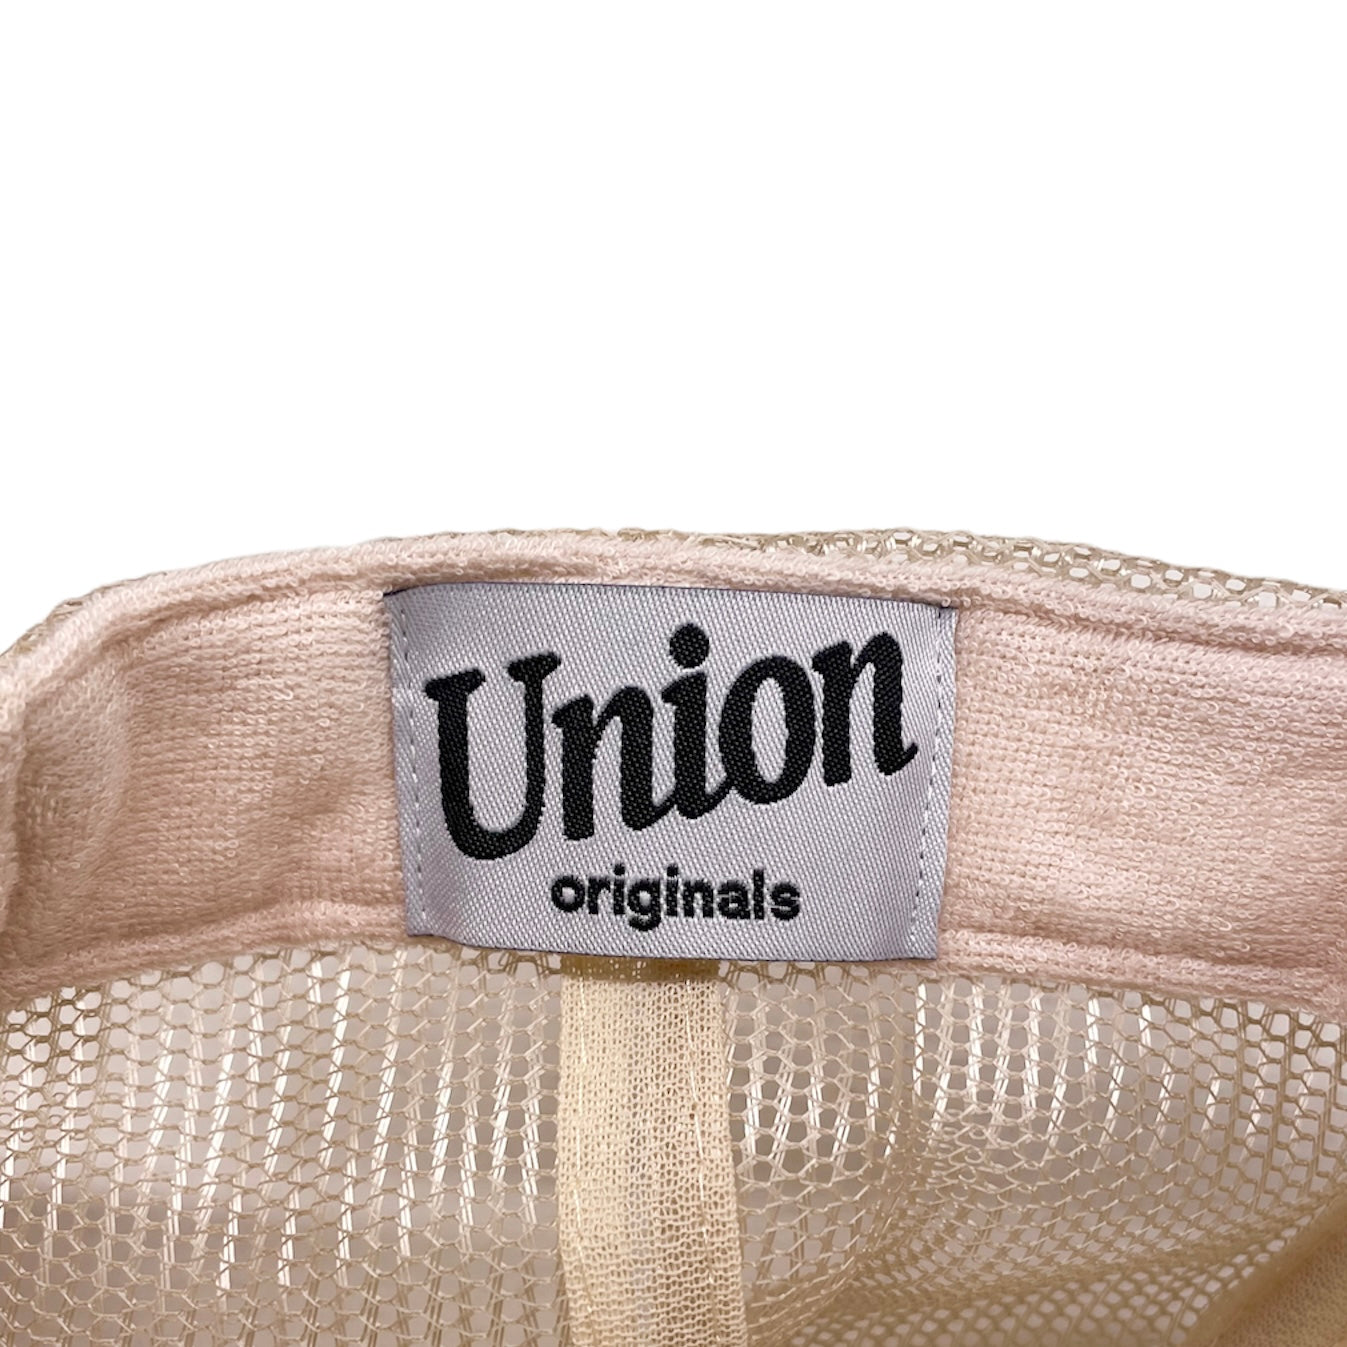 【UNION originals- ユニオンオリジナルス】Topping of Life Mesh Cap / Sand (トッピングオブライフ メッシュキャップ/サンド)